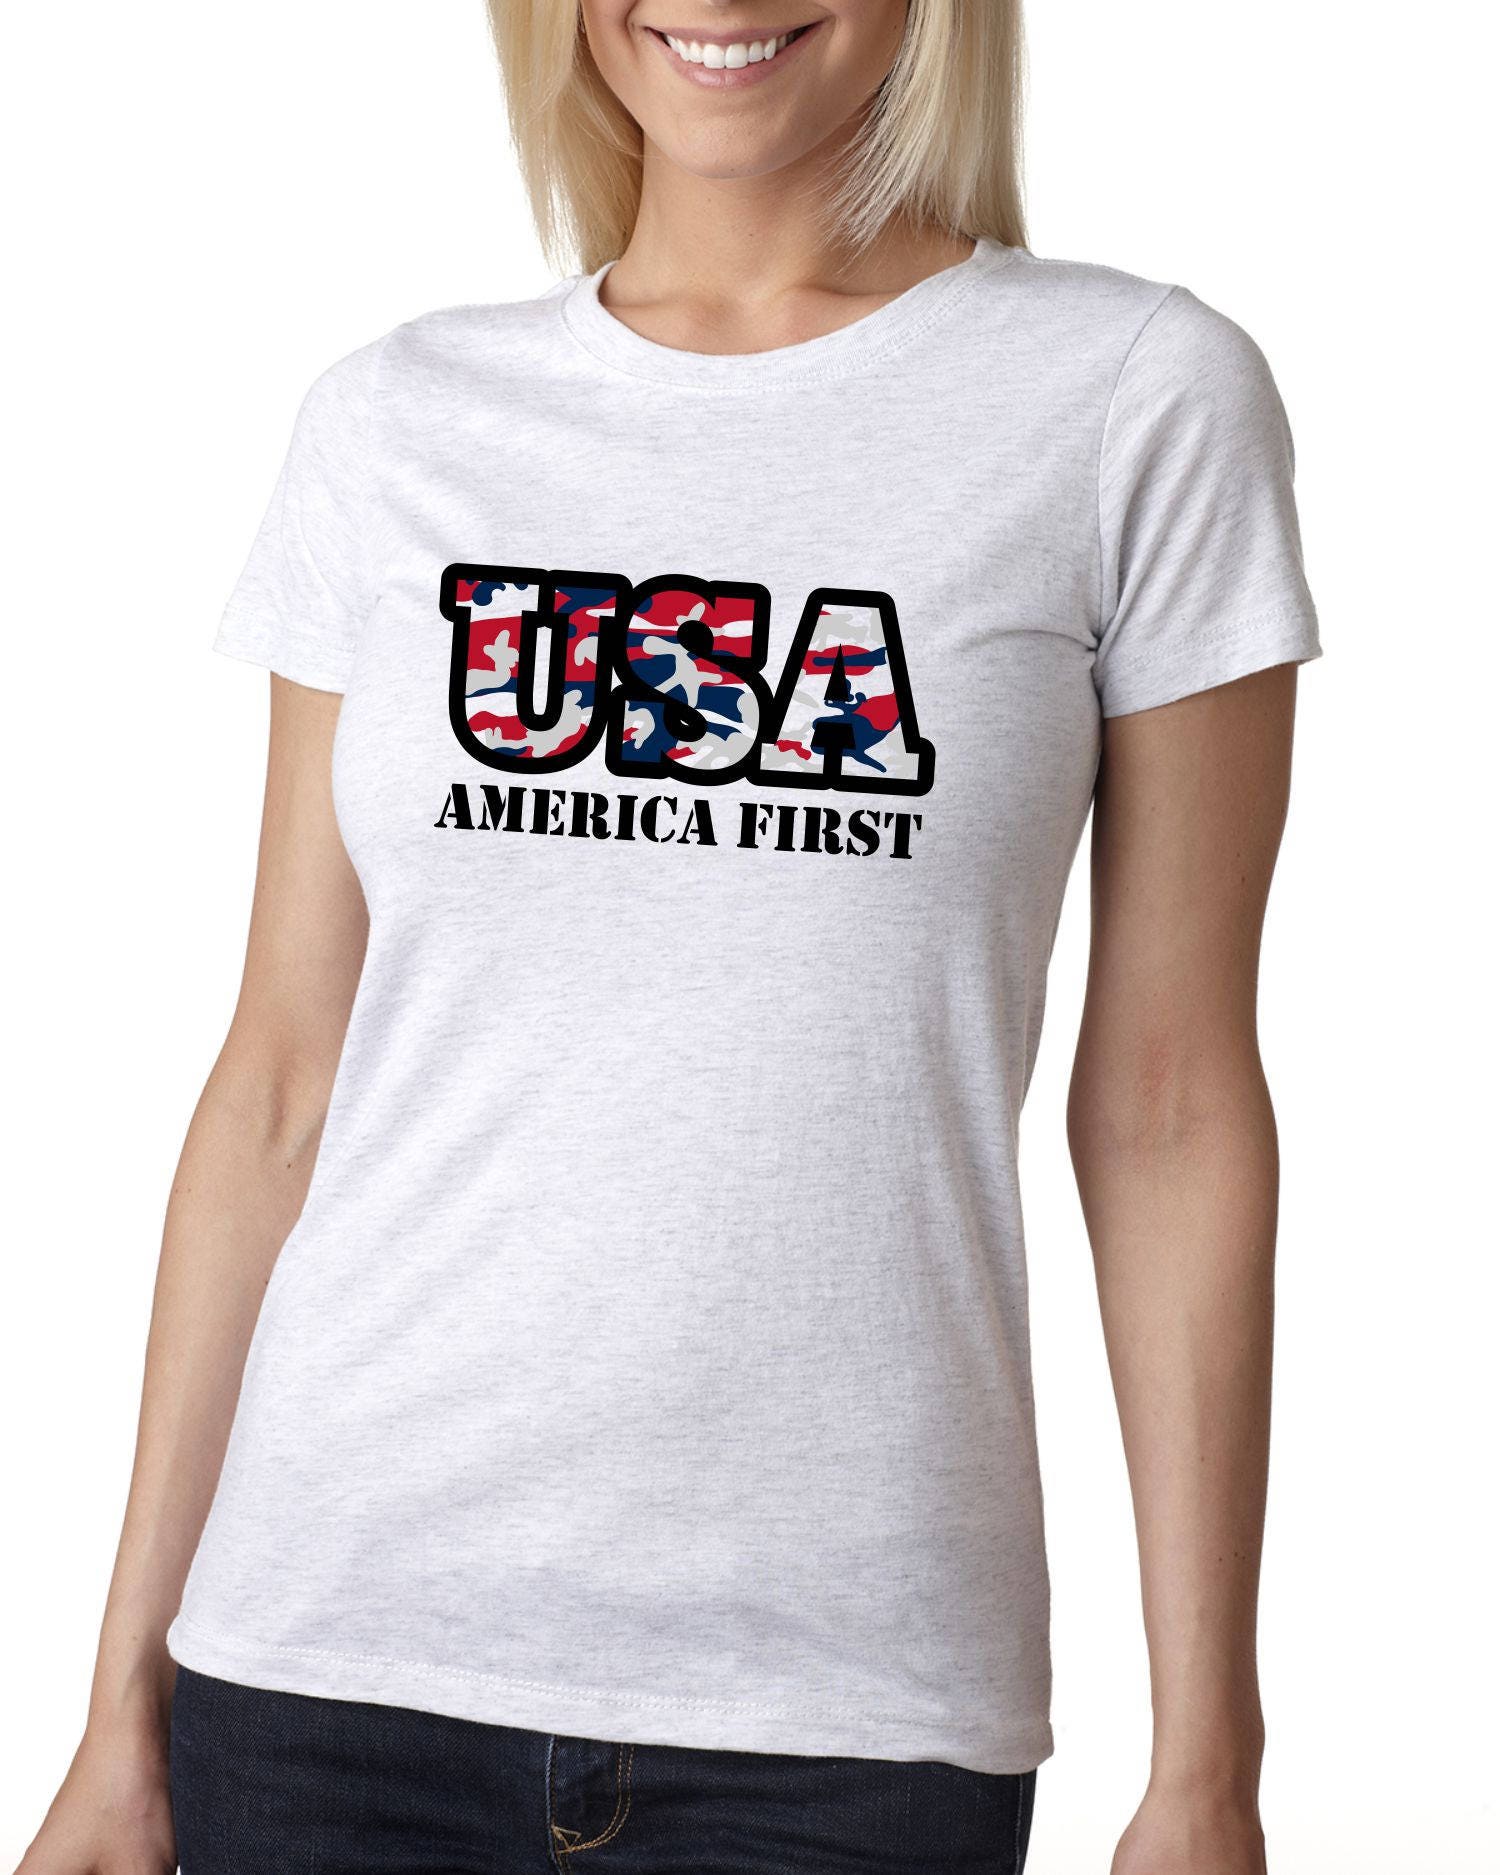 USA America First Shirt Fitted Junior Merica Shirt USA T Shirt Fourth ...